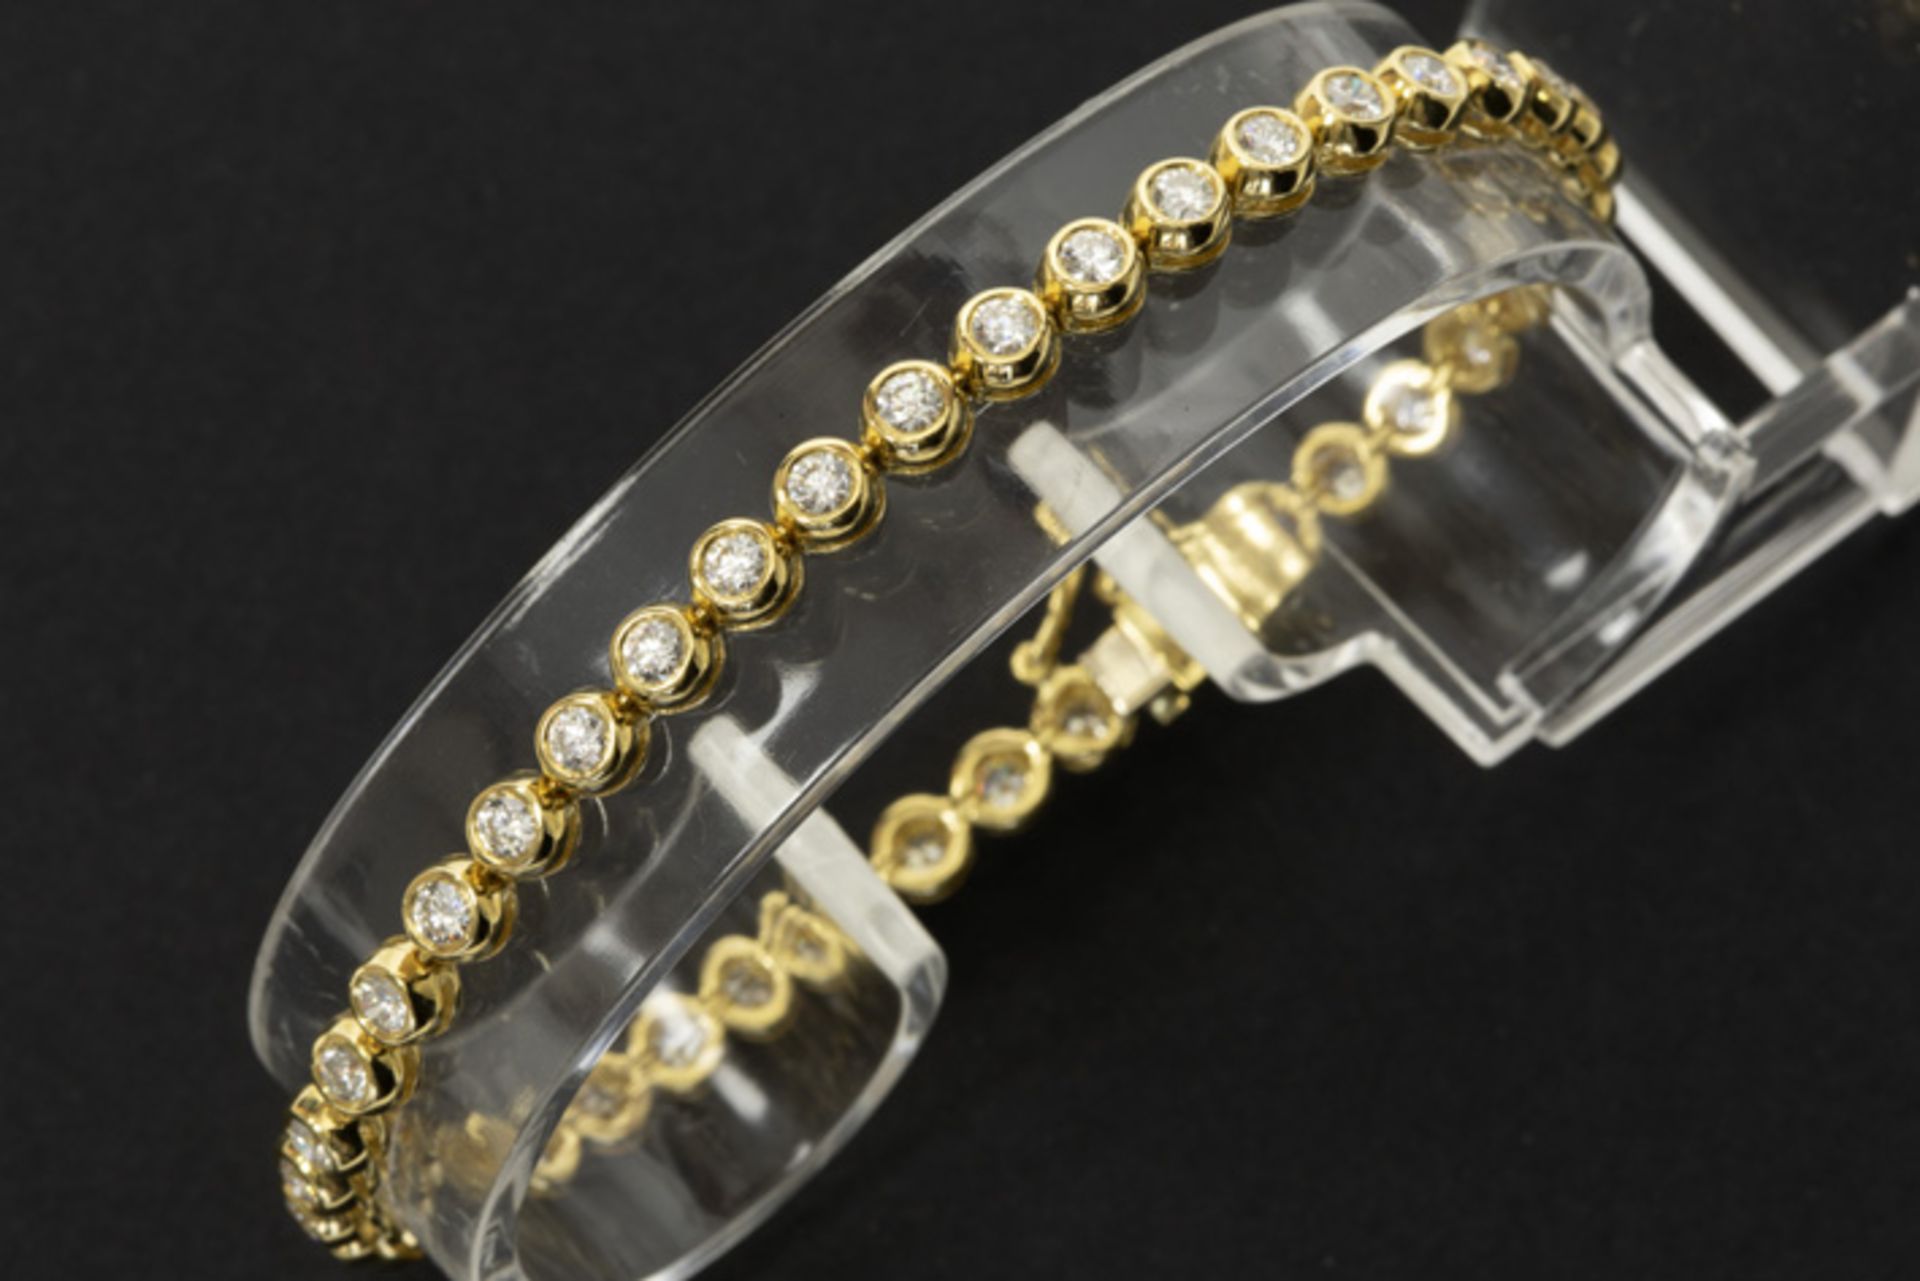 Klassiek rivière-bracelet in geelgoud (18 karaat) met rondom zgn 'potjes' telkens [...]